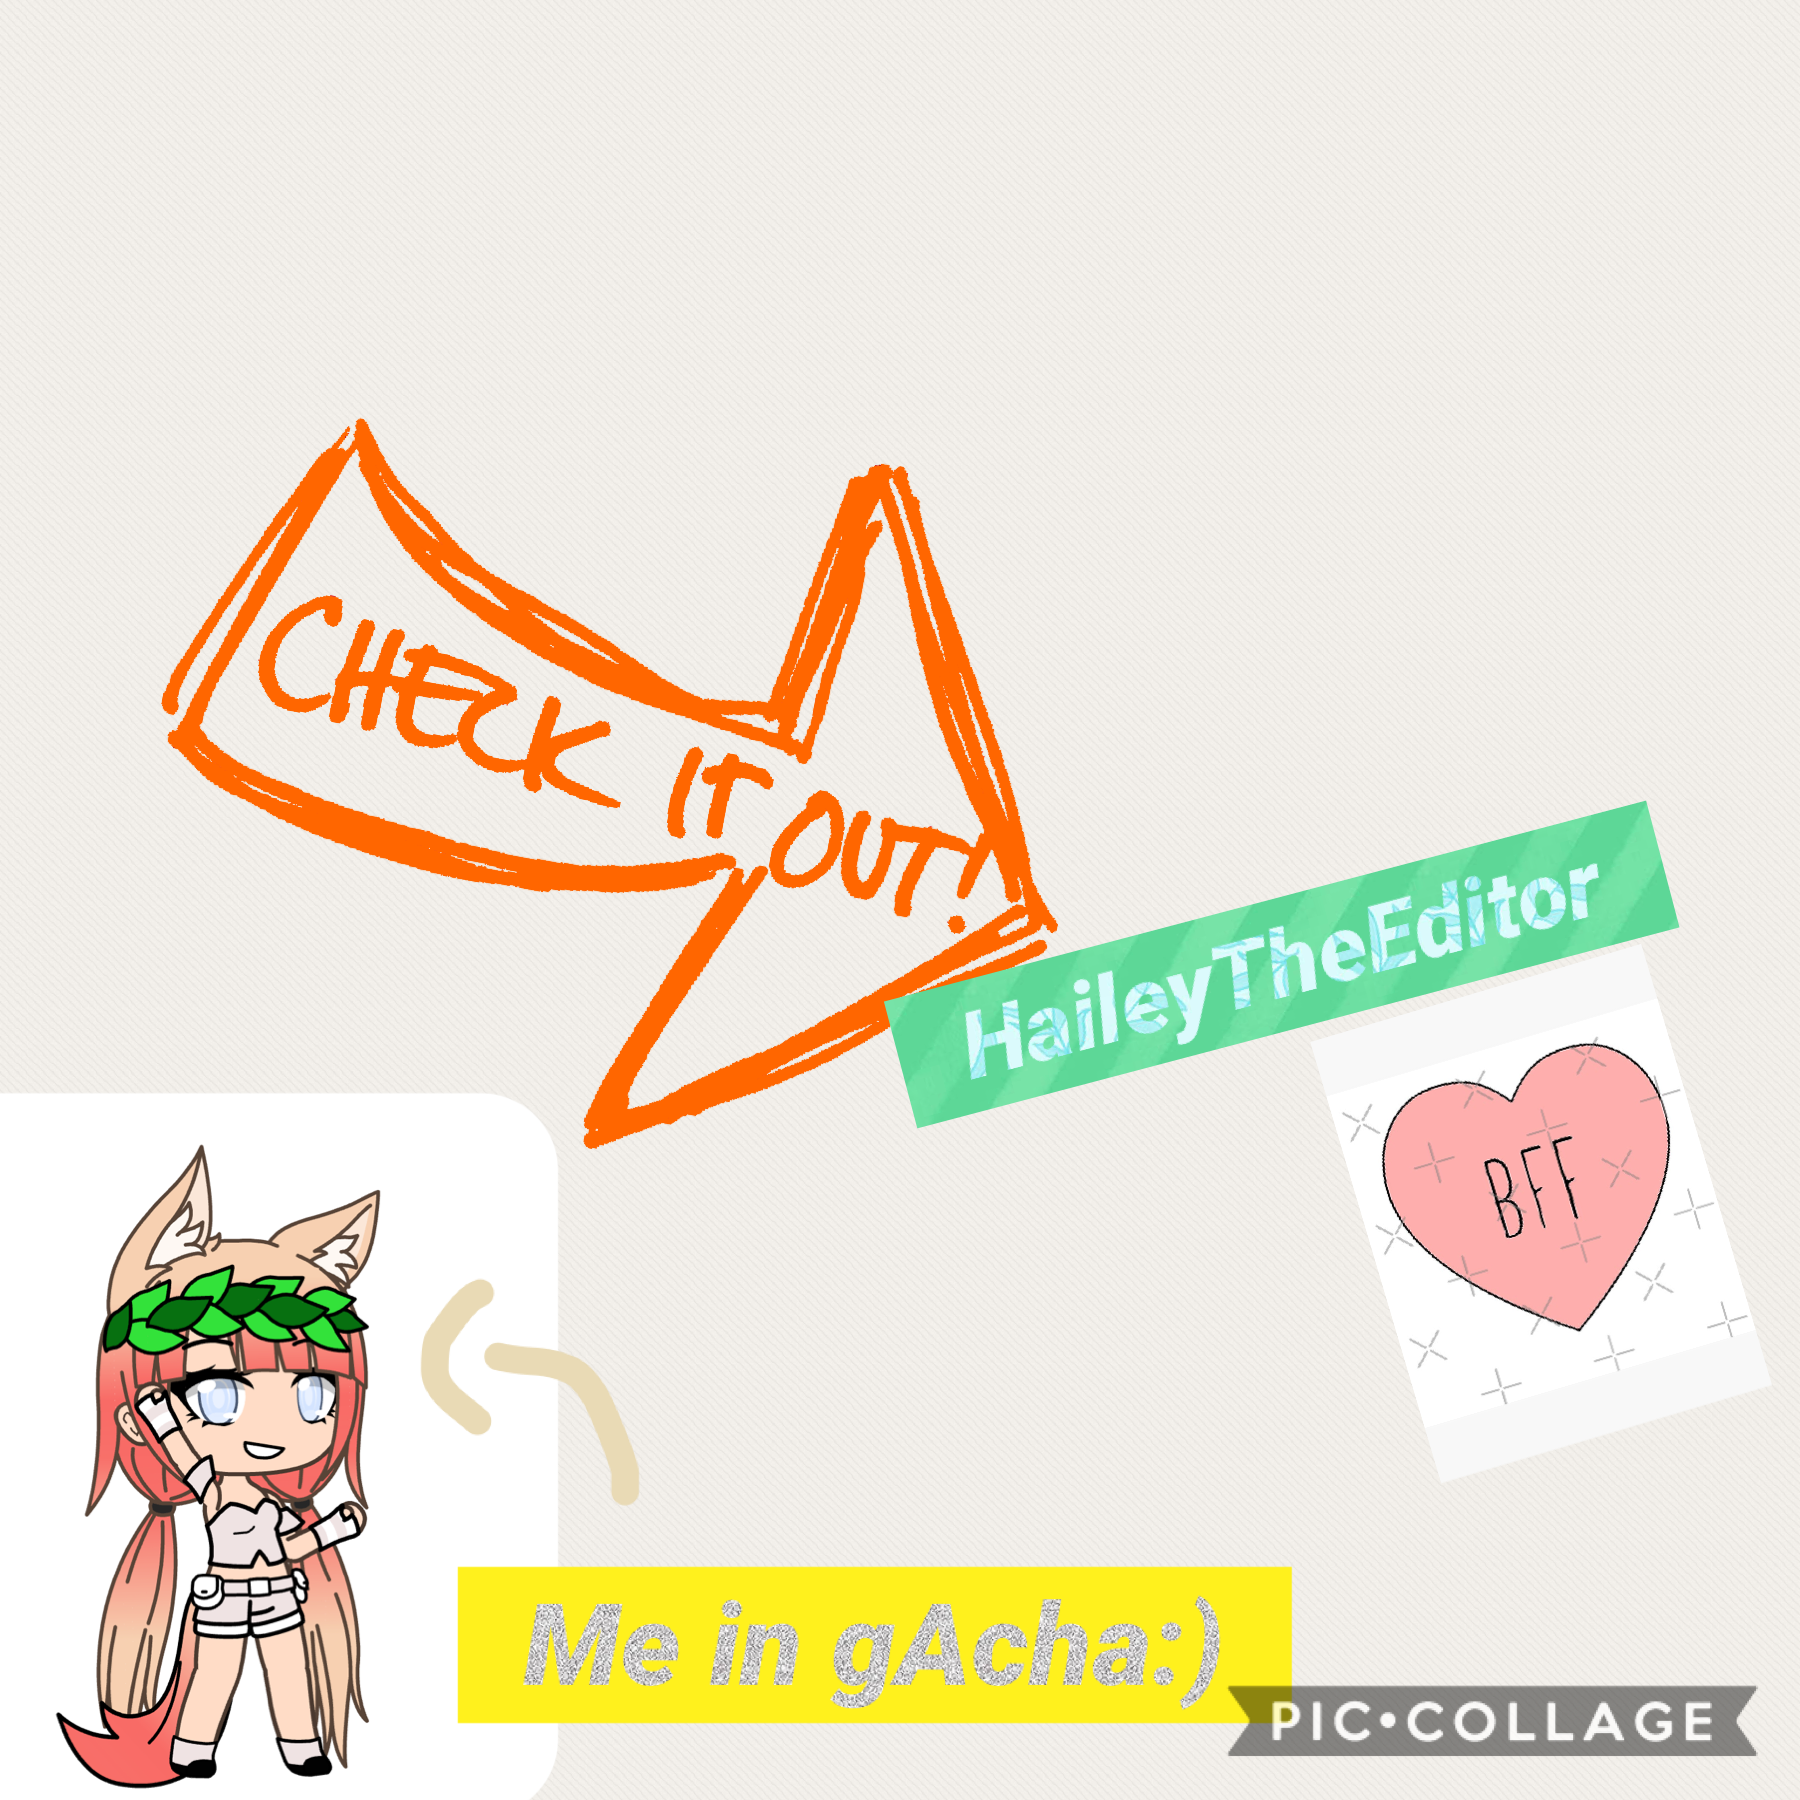 Check out HaileyTheEditor